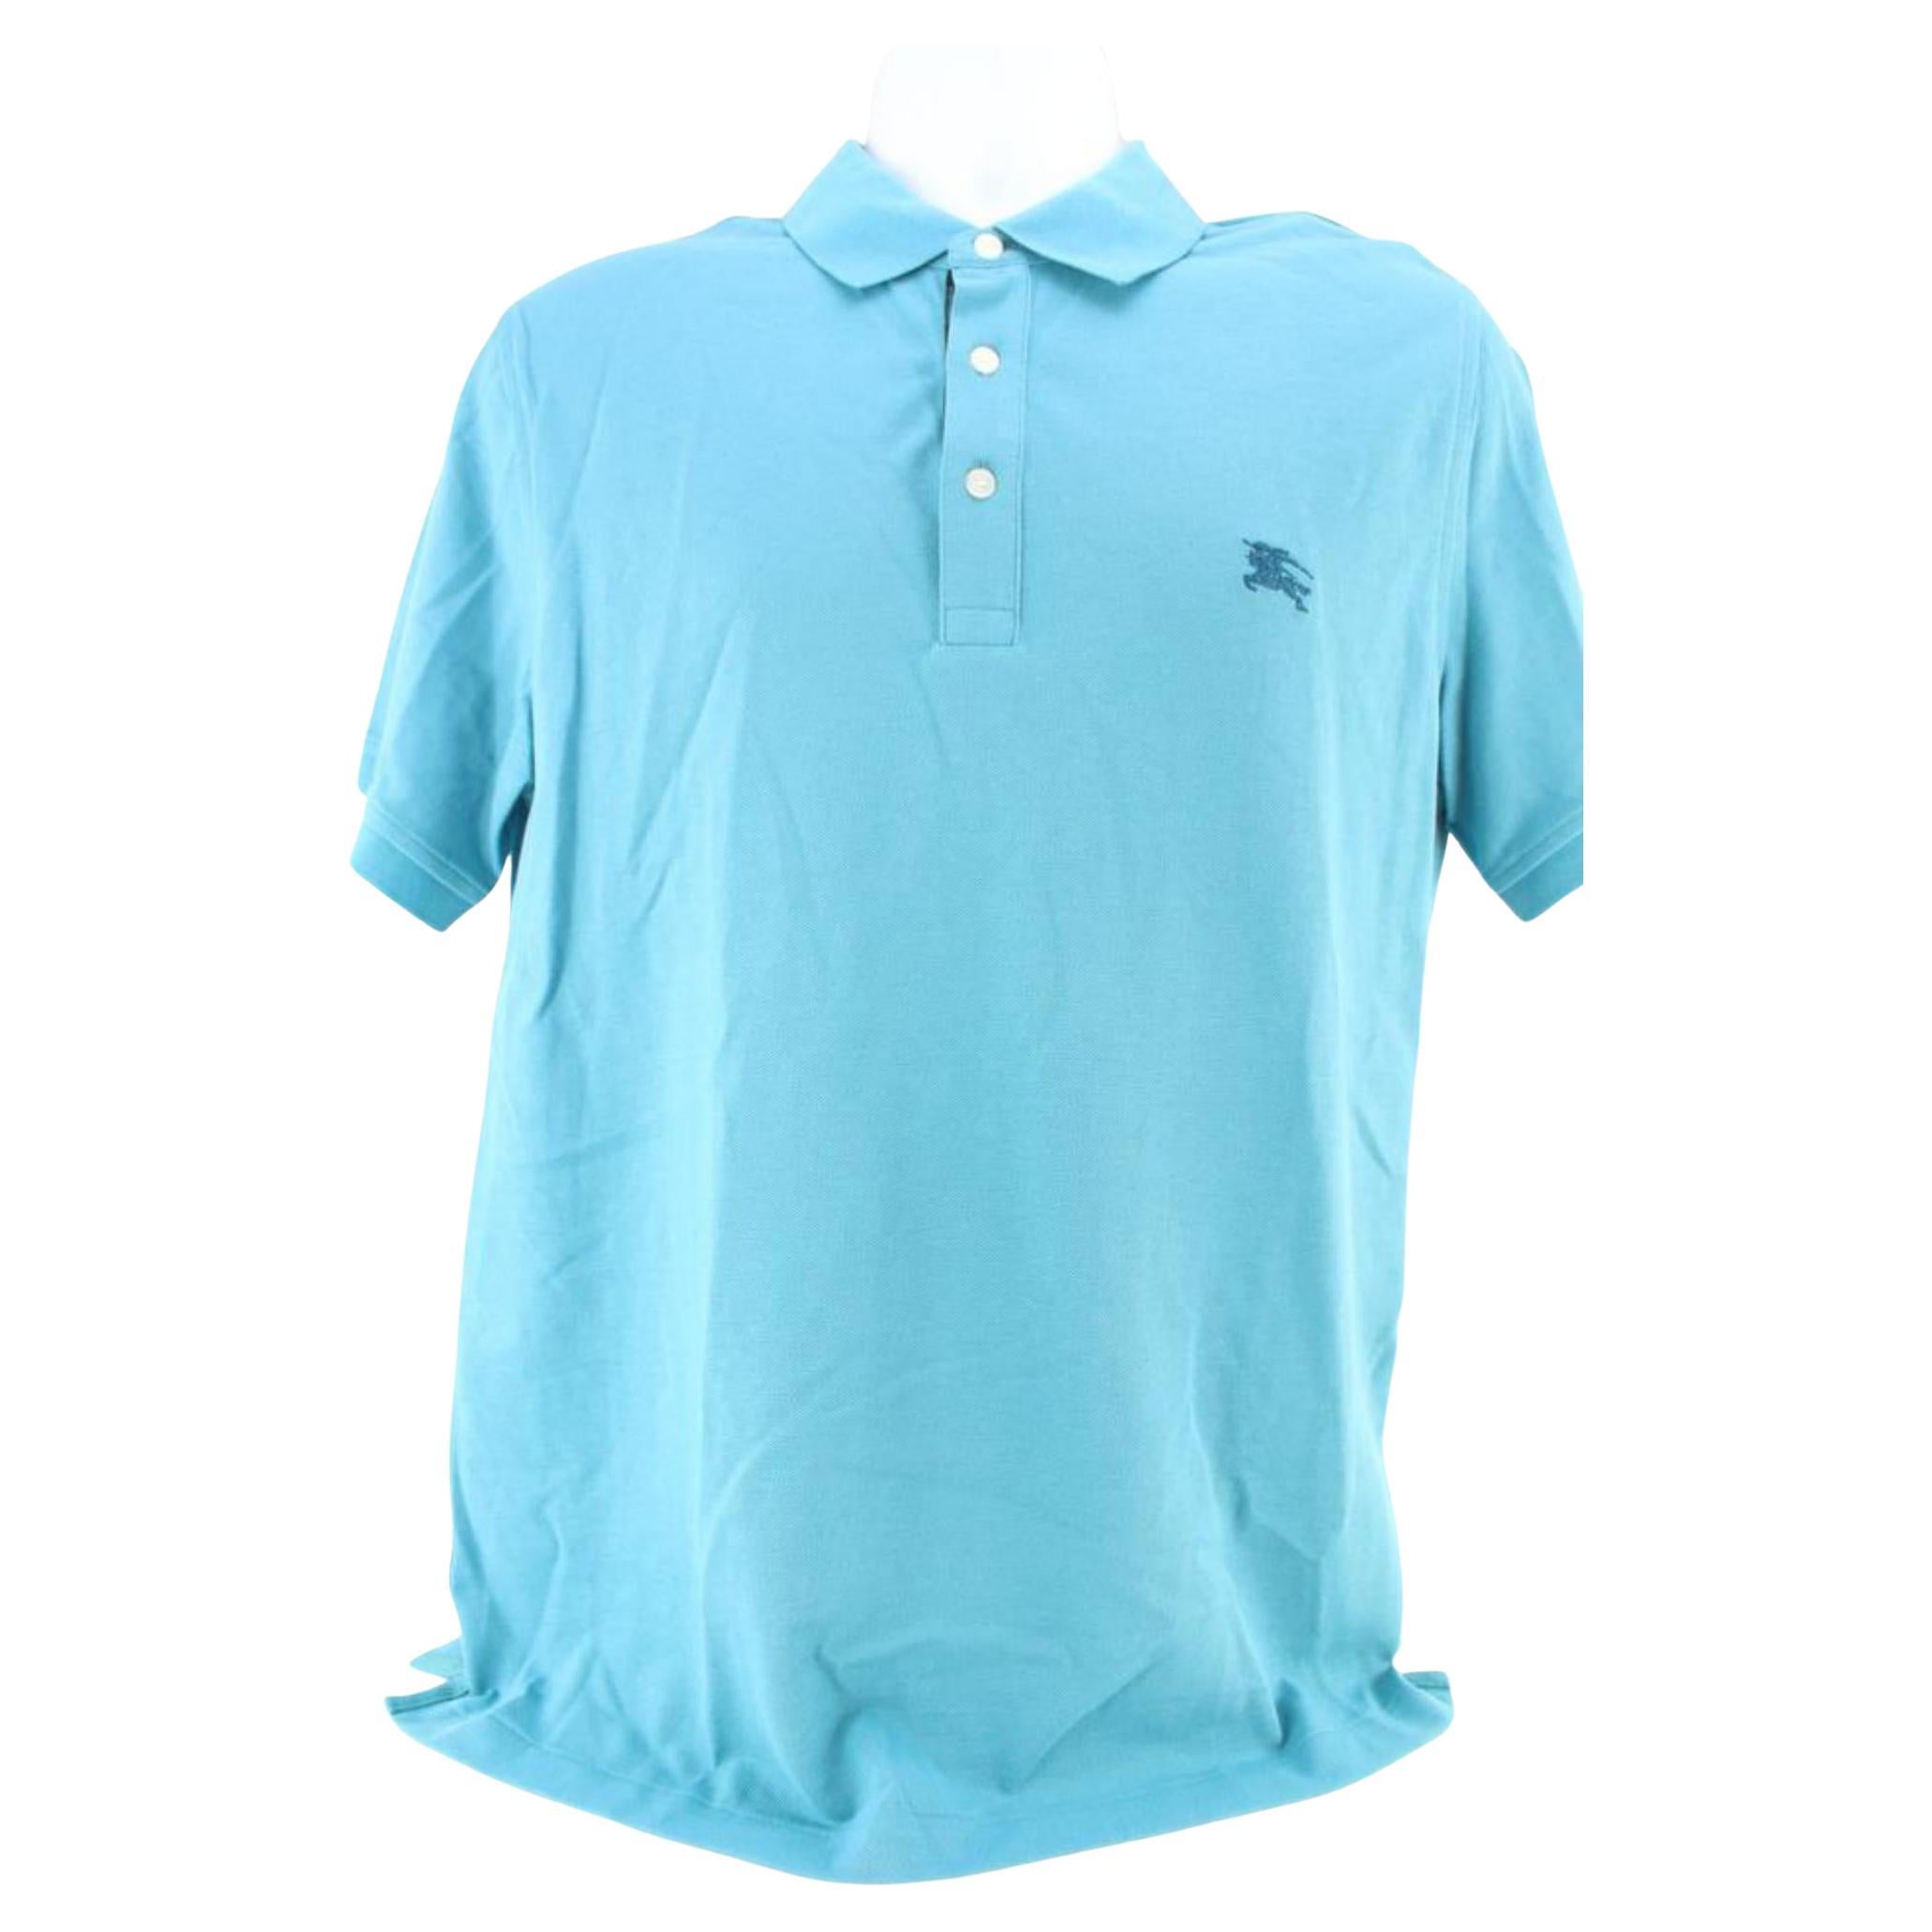 Burberry Brit Men's Large Light Blue Logo Polo Shirt 56B715S For Sale